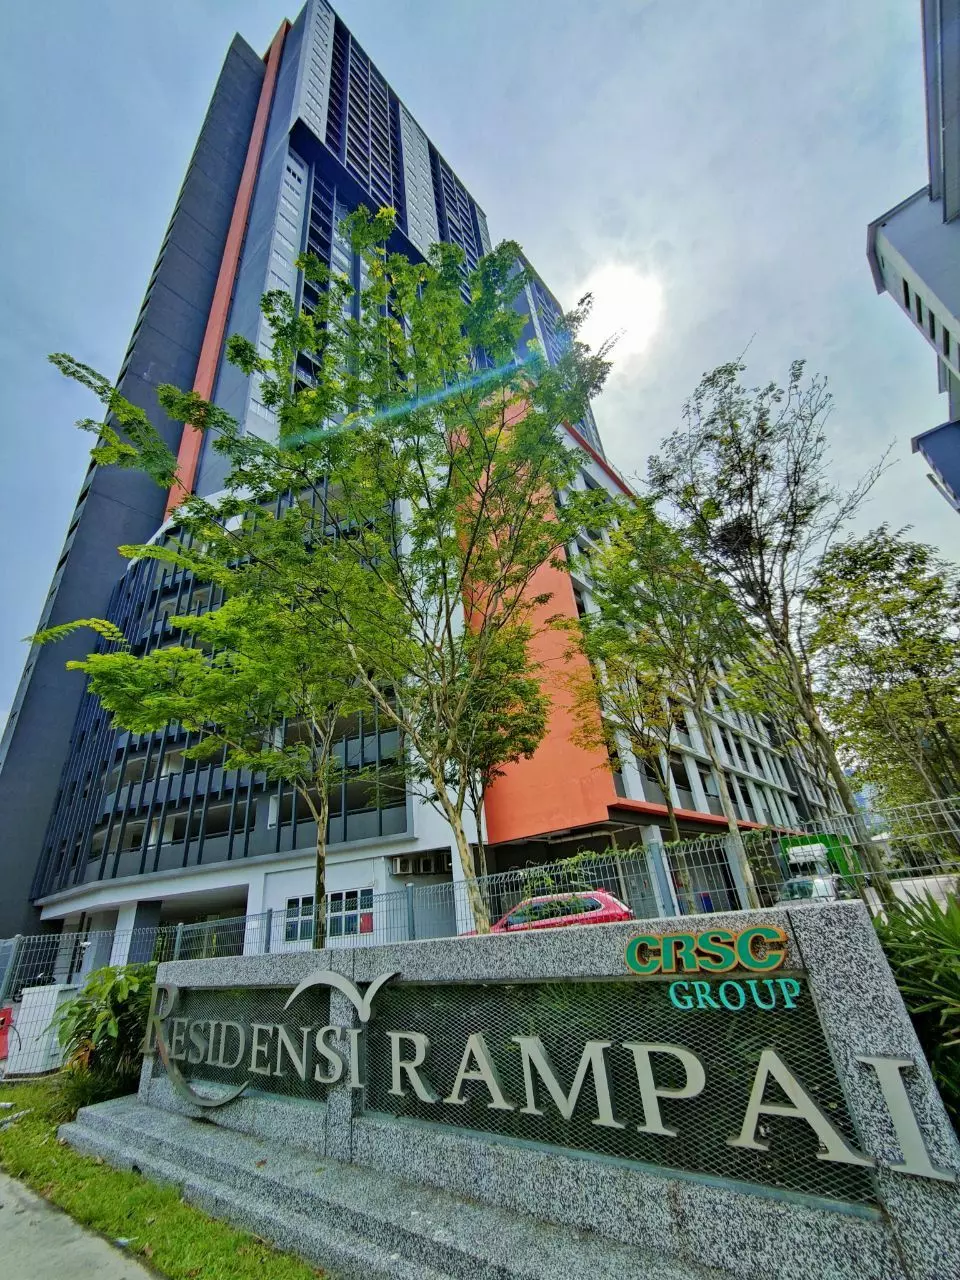 Rumah Lelong Residensi Rampai @ Taman Sri Rampai, Setapak, Kuala Lumpur for Auction